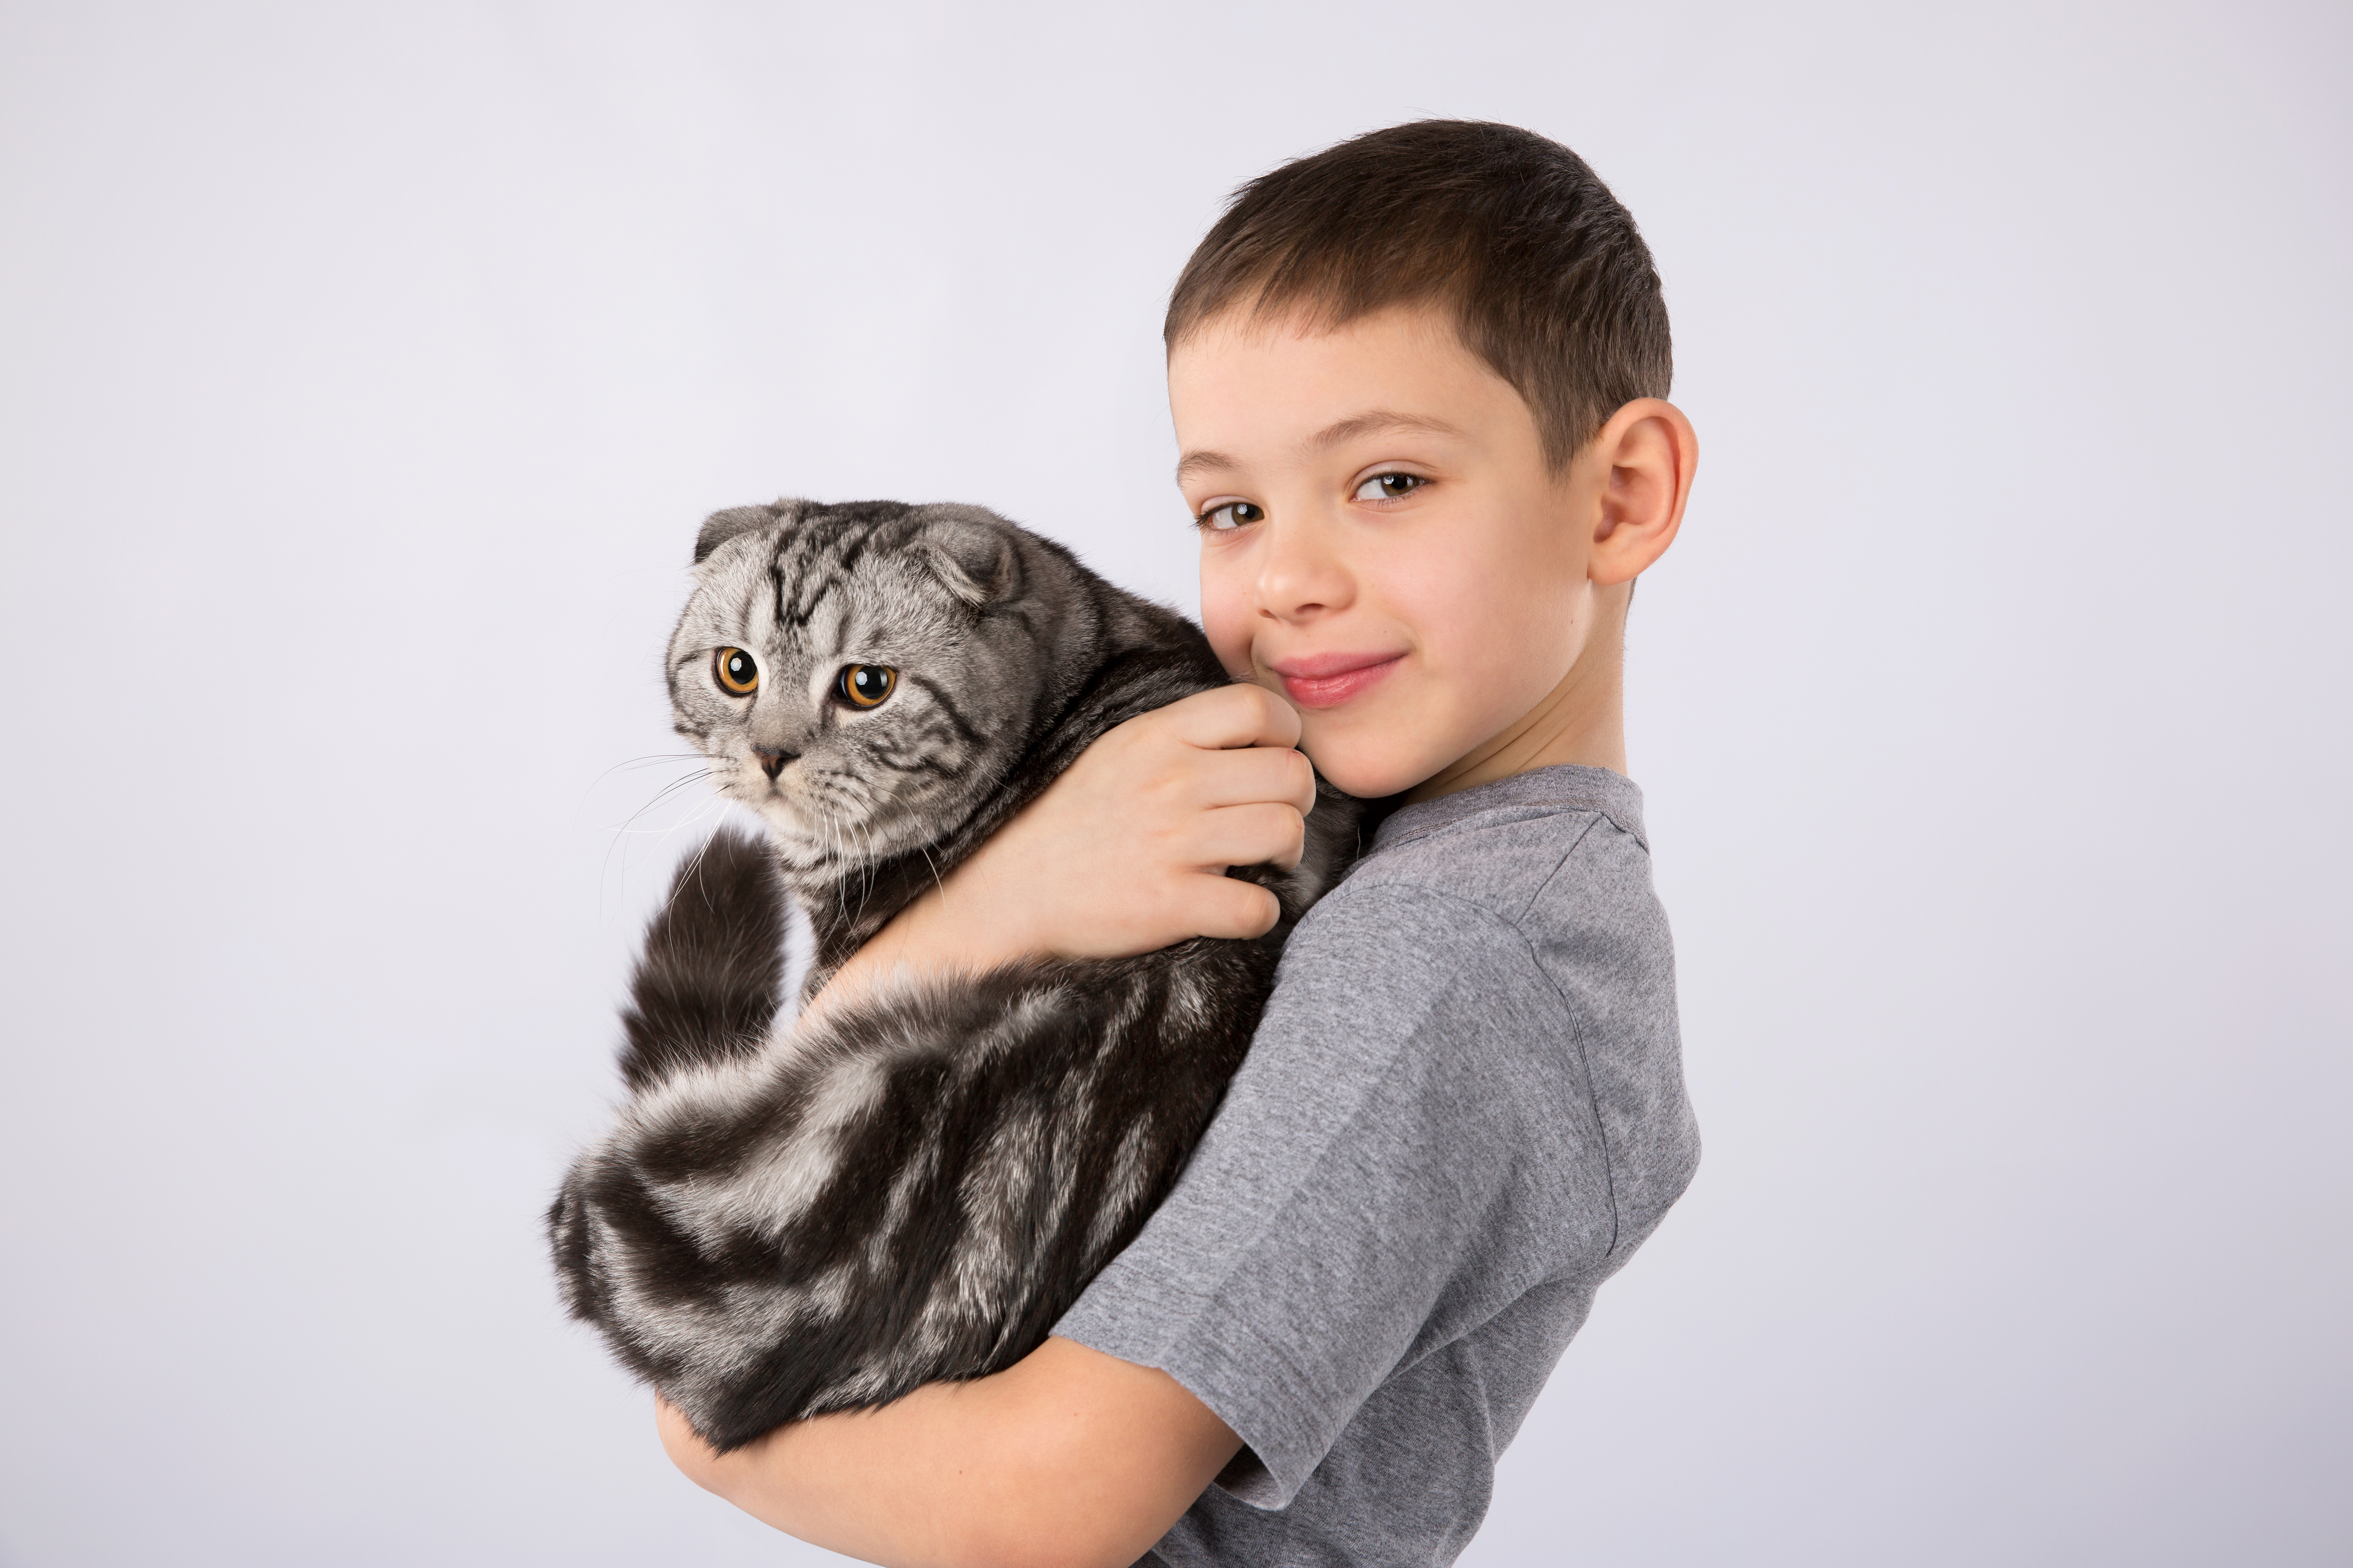 Включи кот пацан. Шотландская вислоухая кошка мальчик. Кошка мальчик. Мальчик с котом на руках.